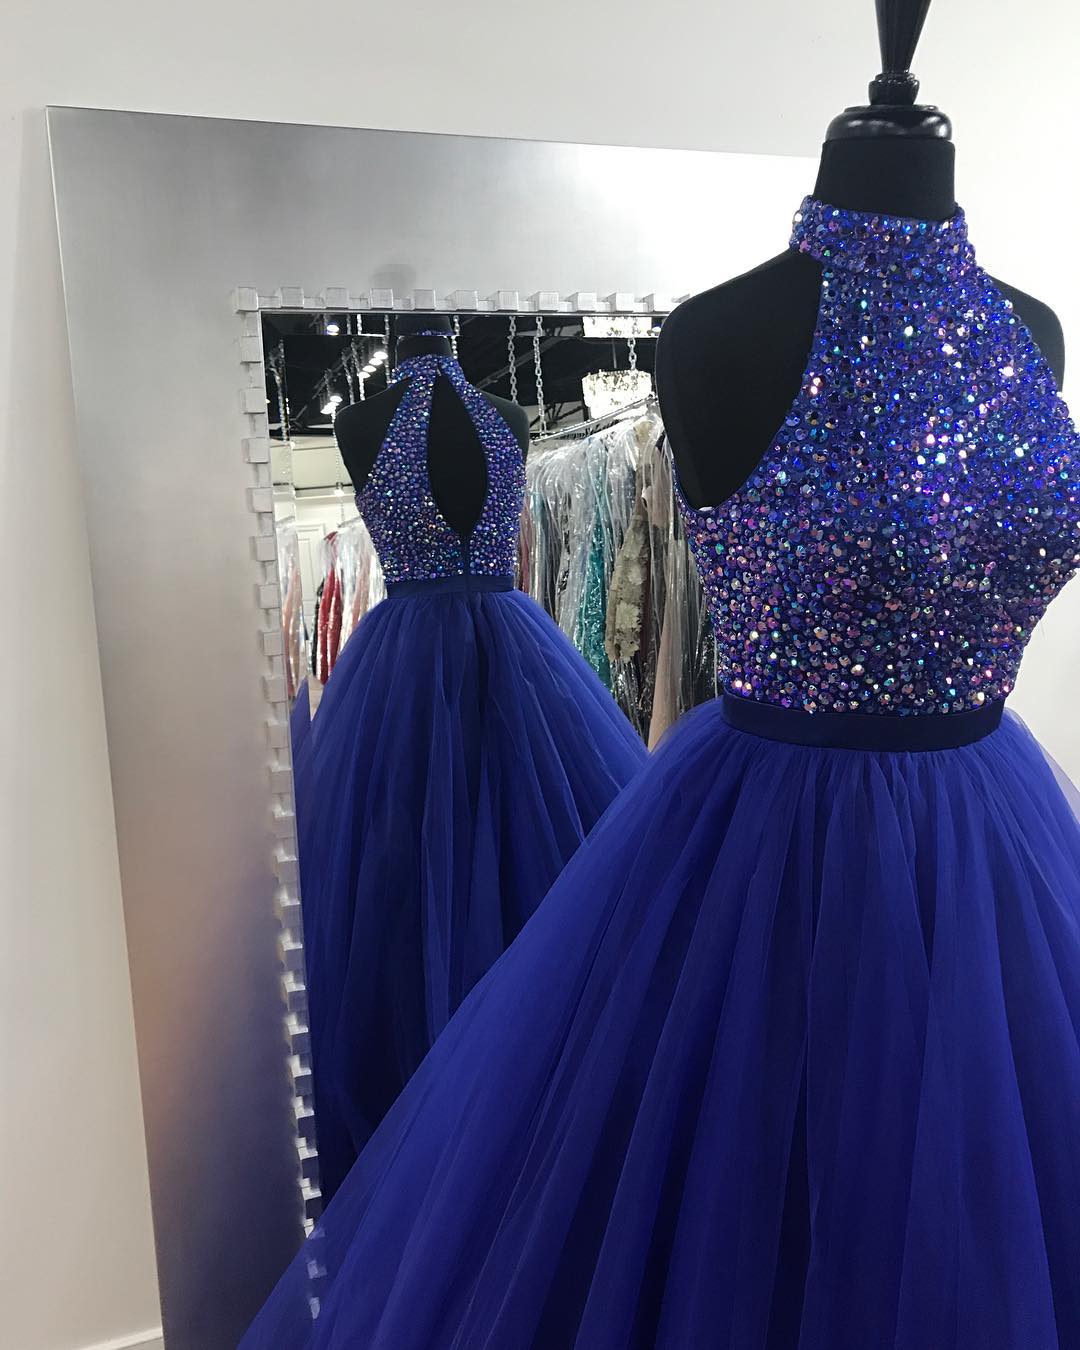 shiny royal blue dress